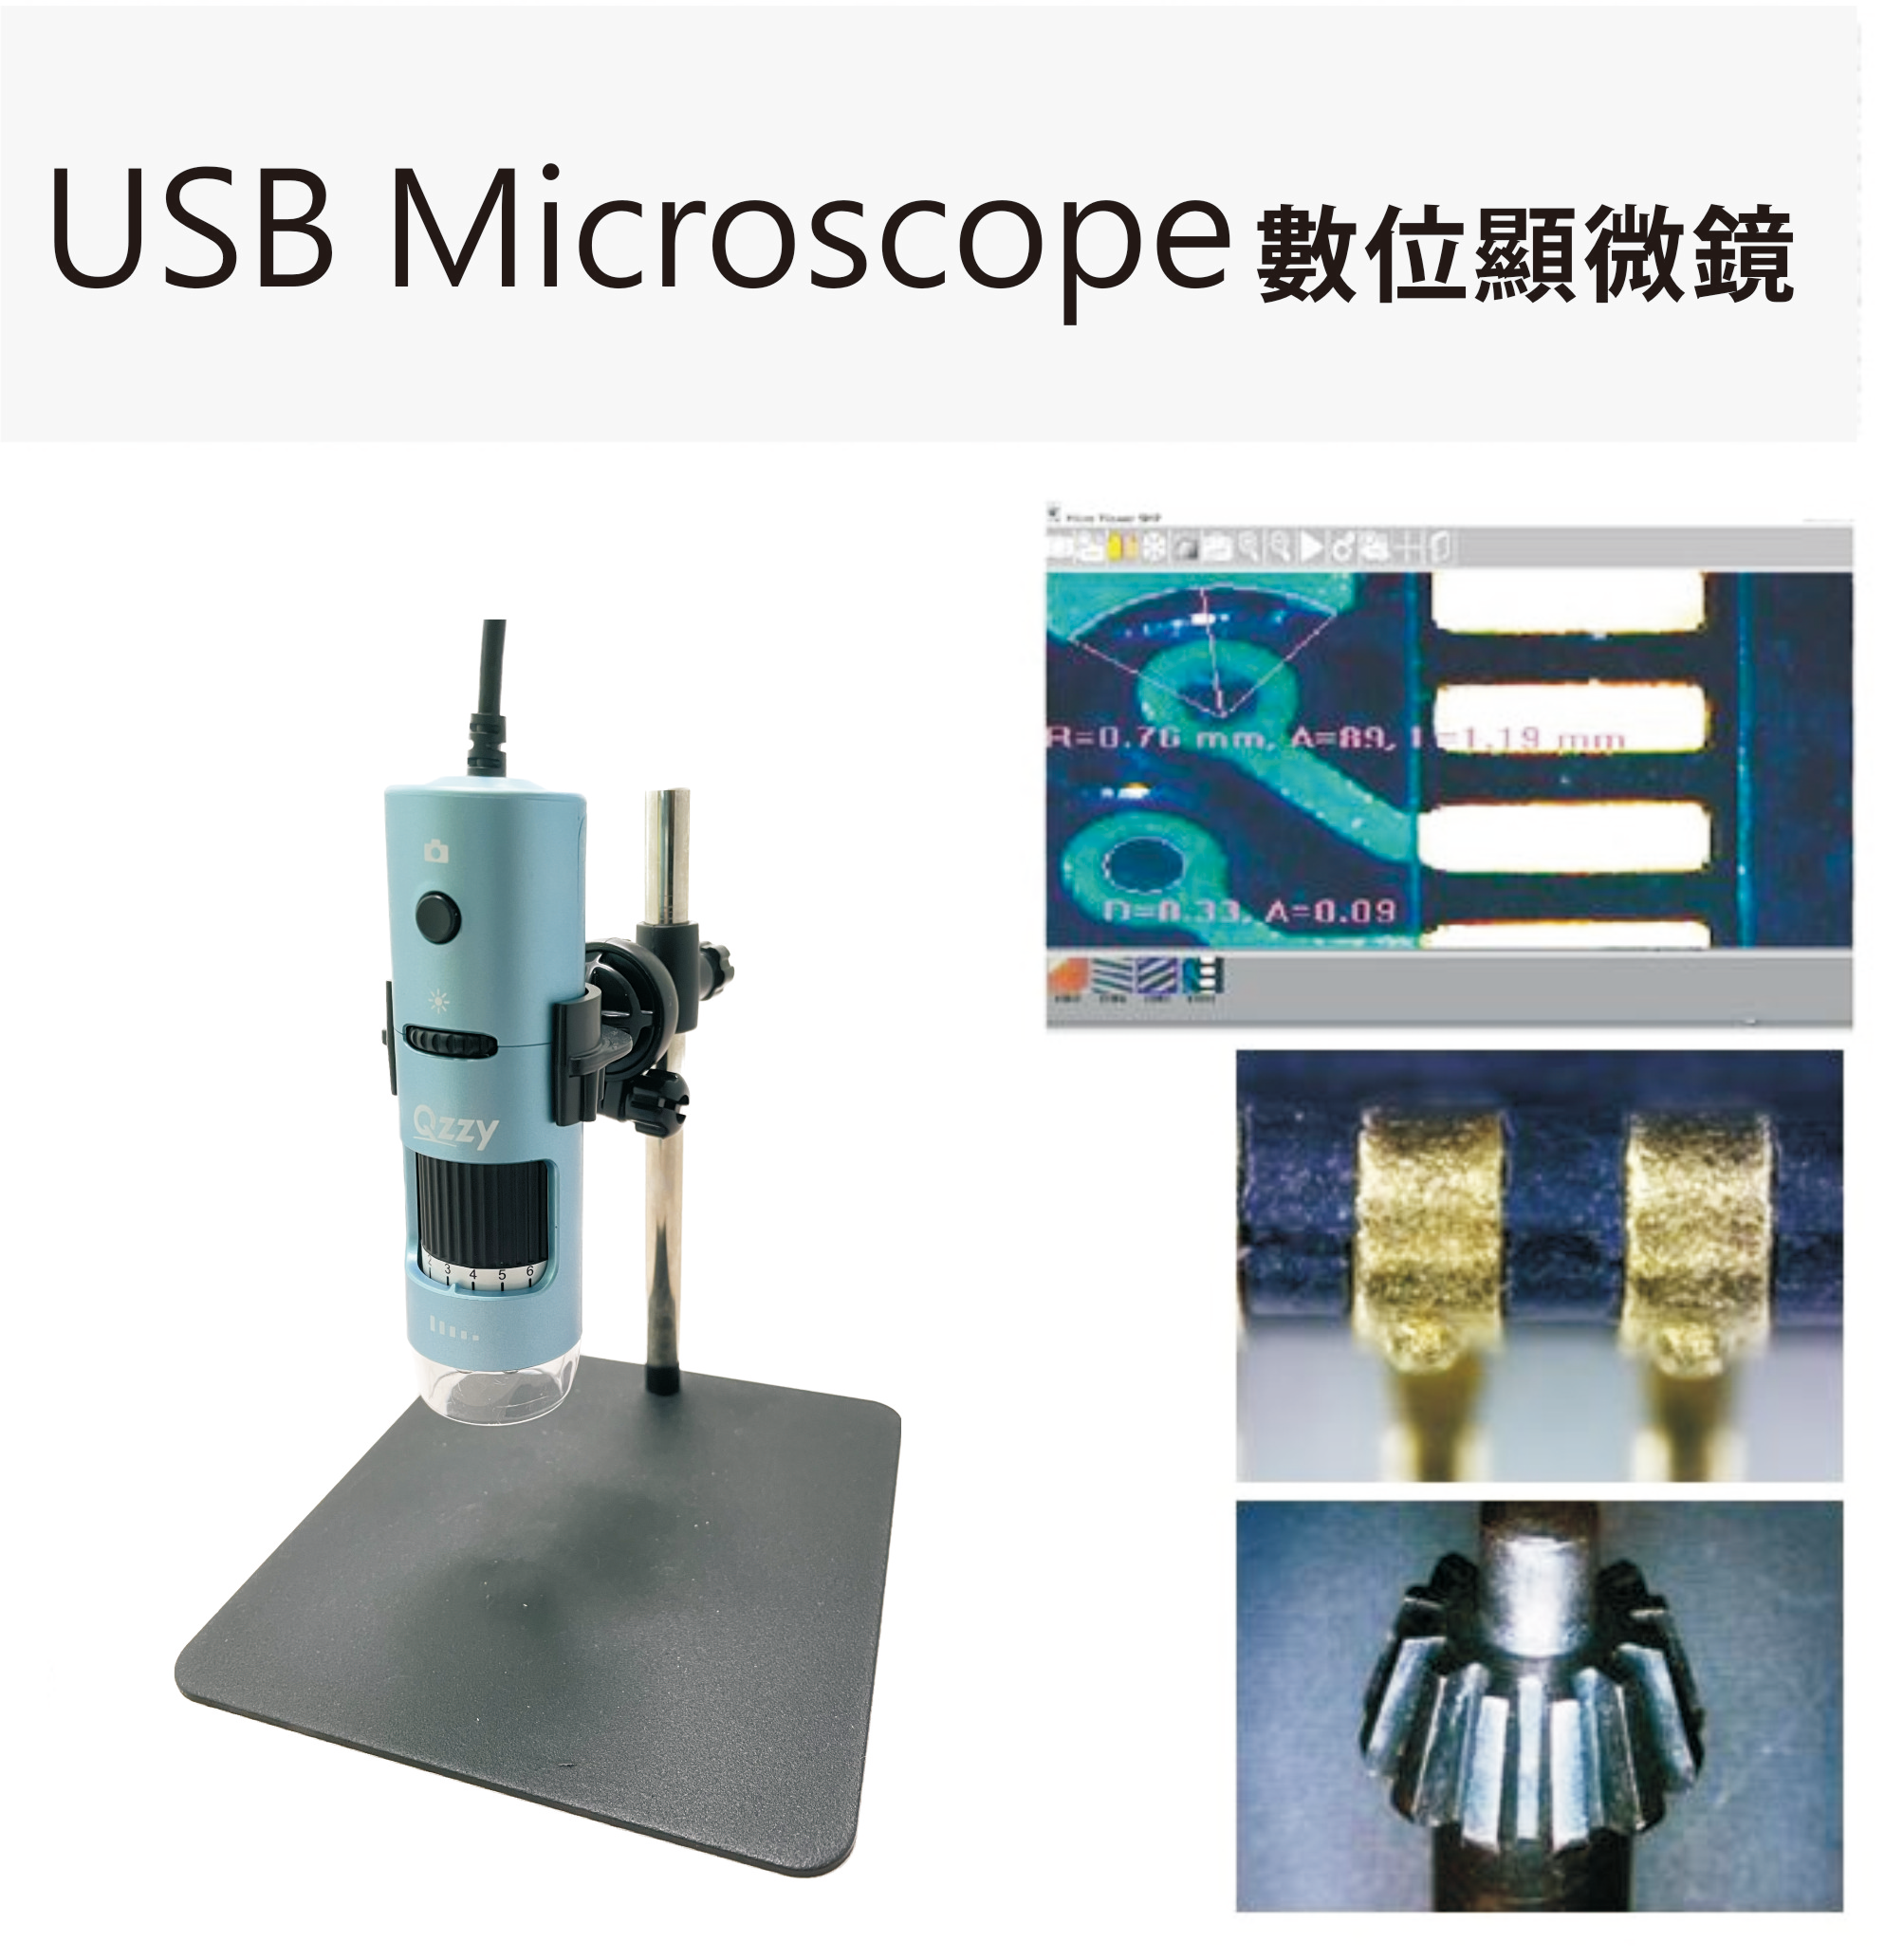 USB Microscope  有線數位顯微鏡200倍